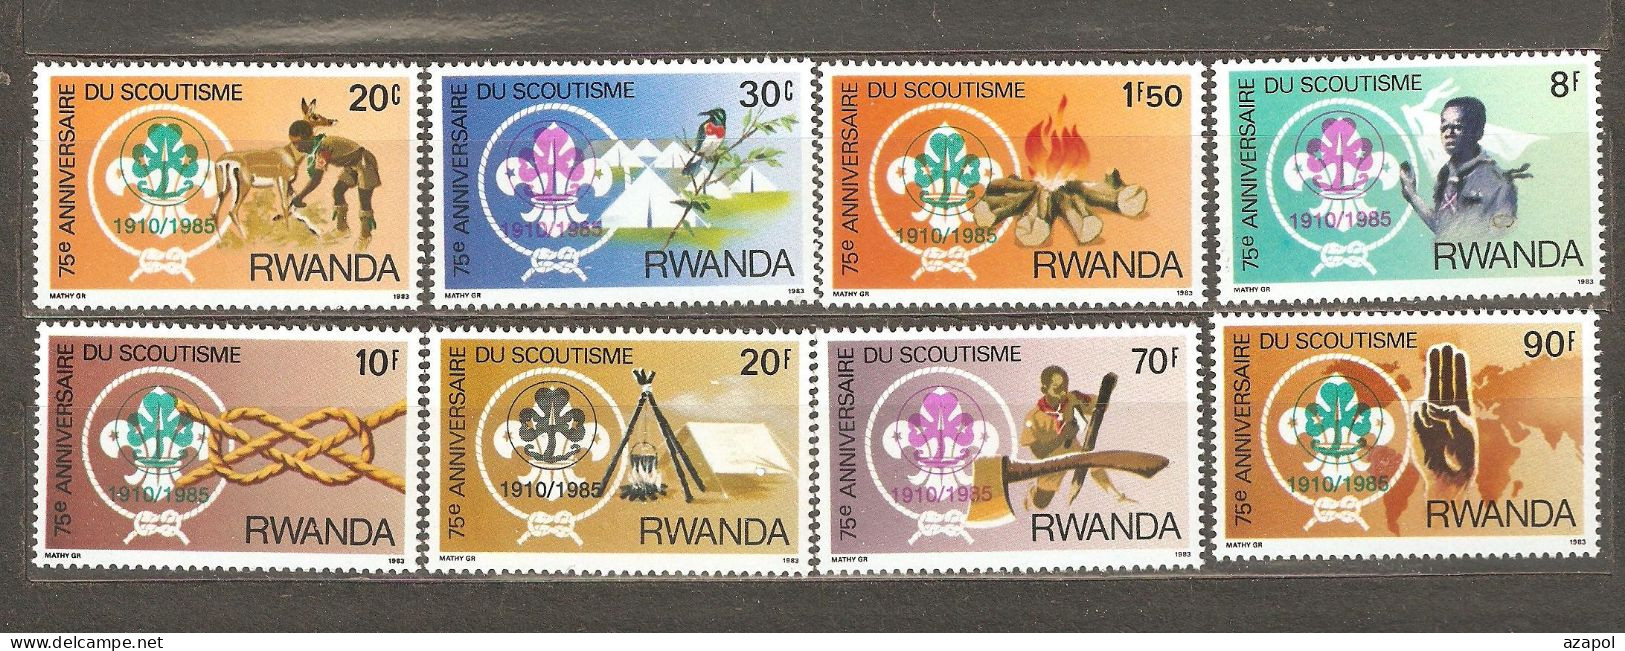 Rwanda: Full Set Of 8 Mint Stamps - Overprint, Girl Guide Movement, 1985, Mi#1318-25, MNH - Unused Stamps